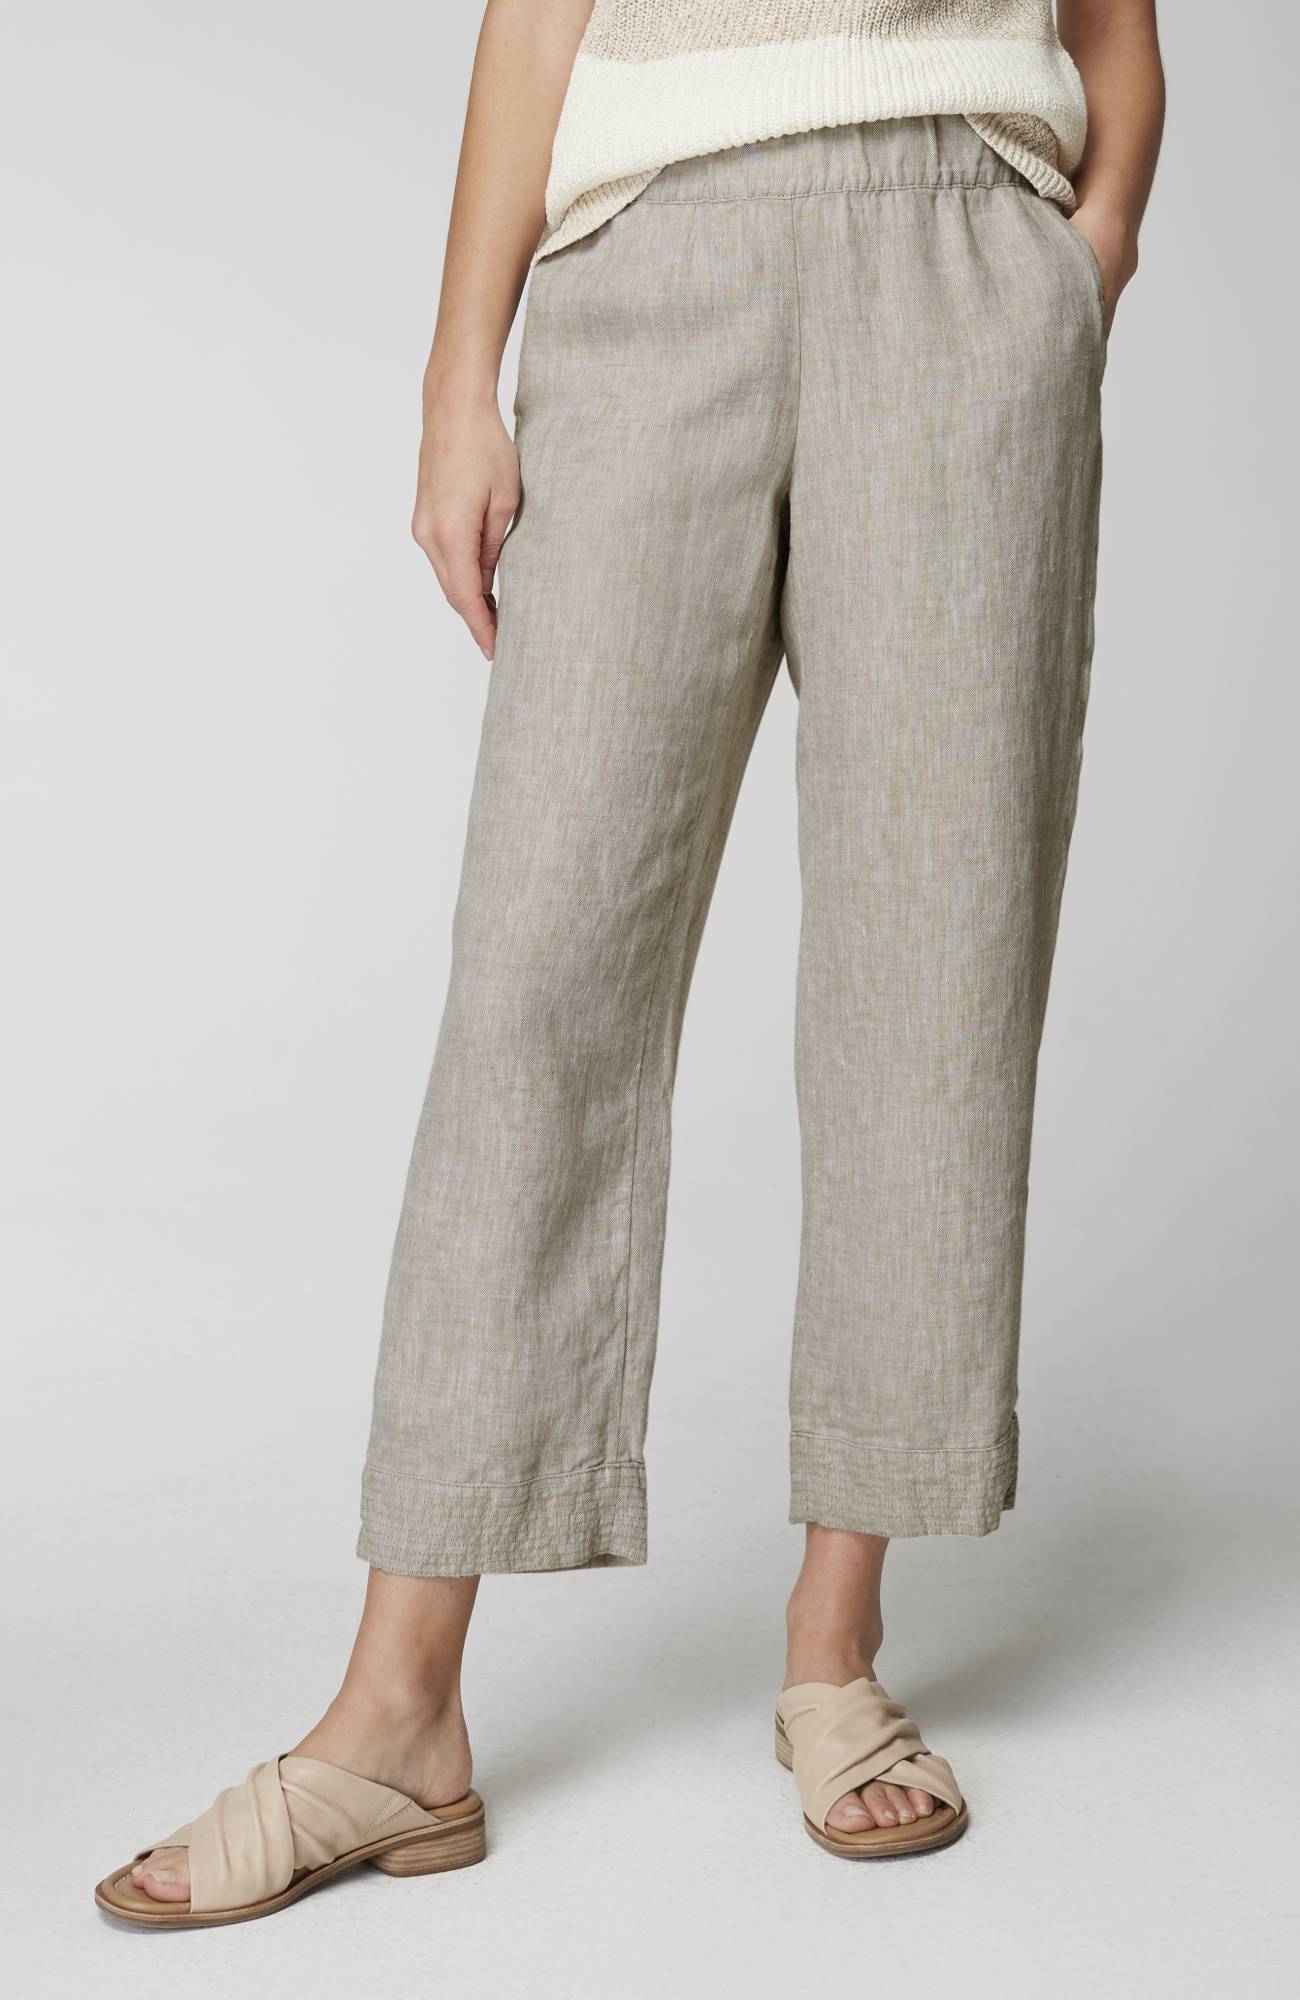 Pure Jill Linen Trapunto-Stitched Pants